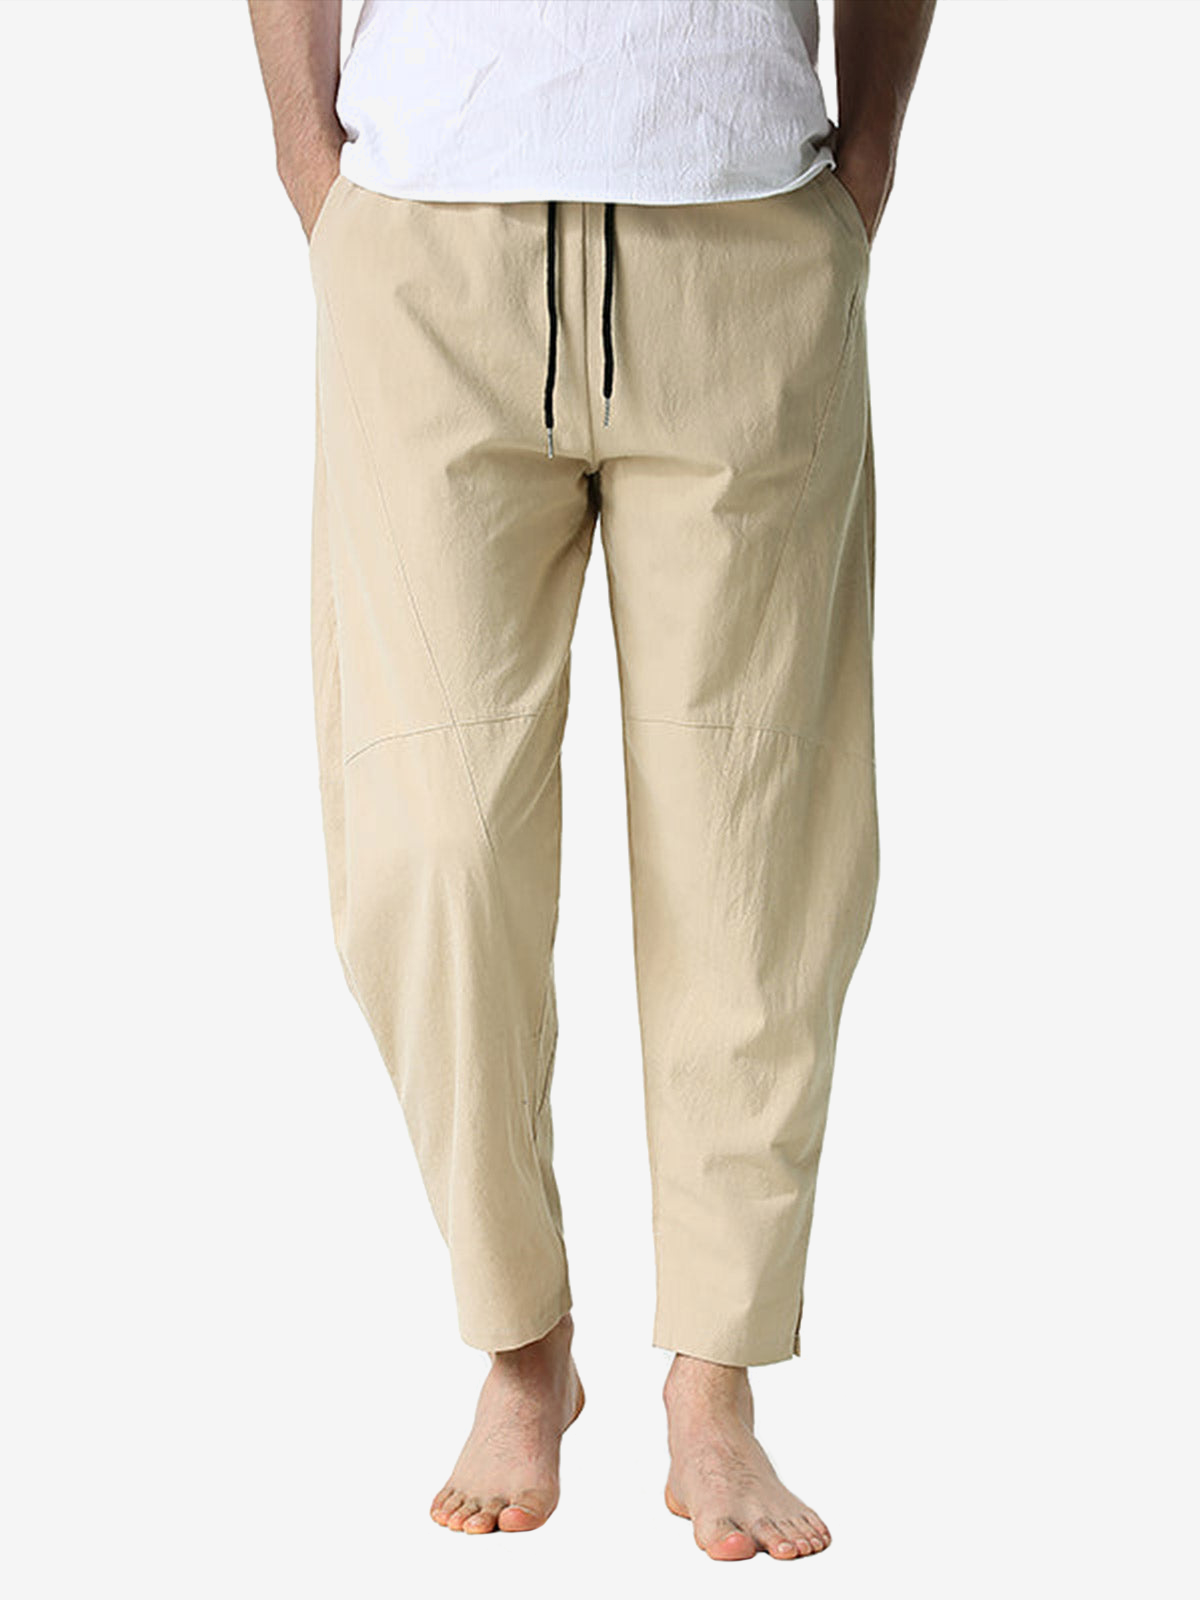 Men's Cotton Loose Casual Lightweight Elastic Waist Pants